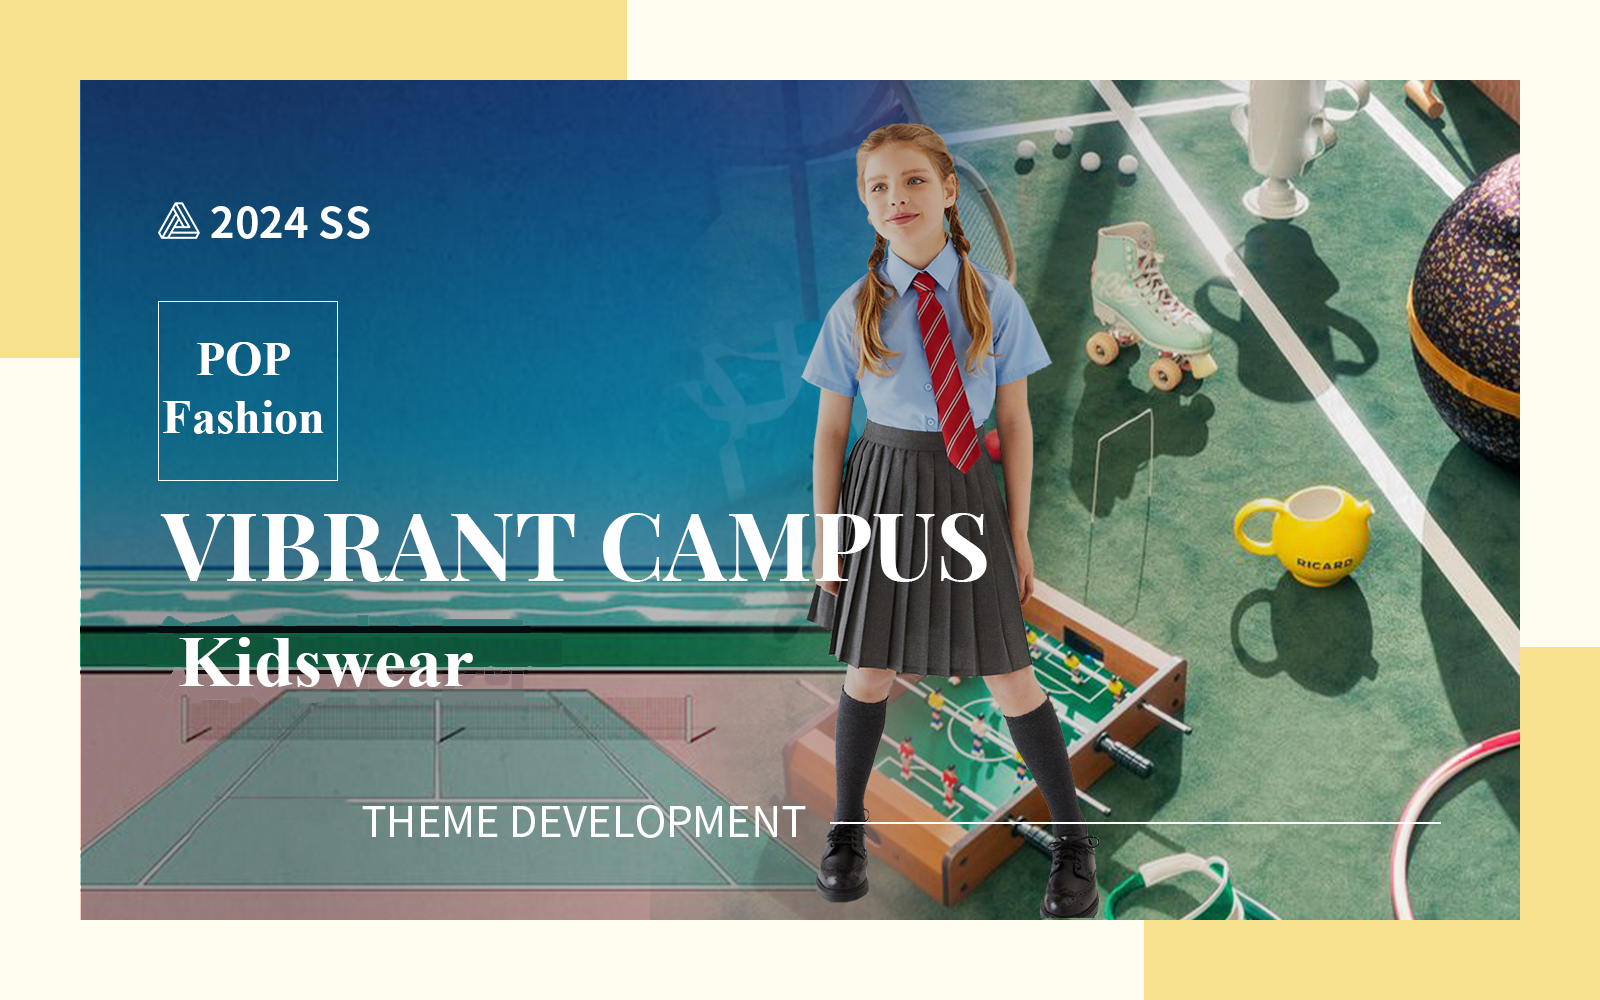 Vibrant Campus -- The Design Development of Kidswear